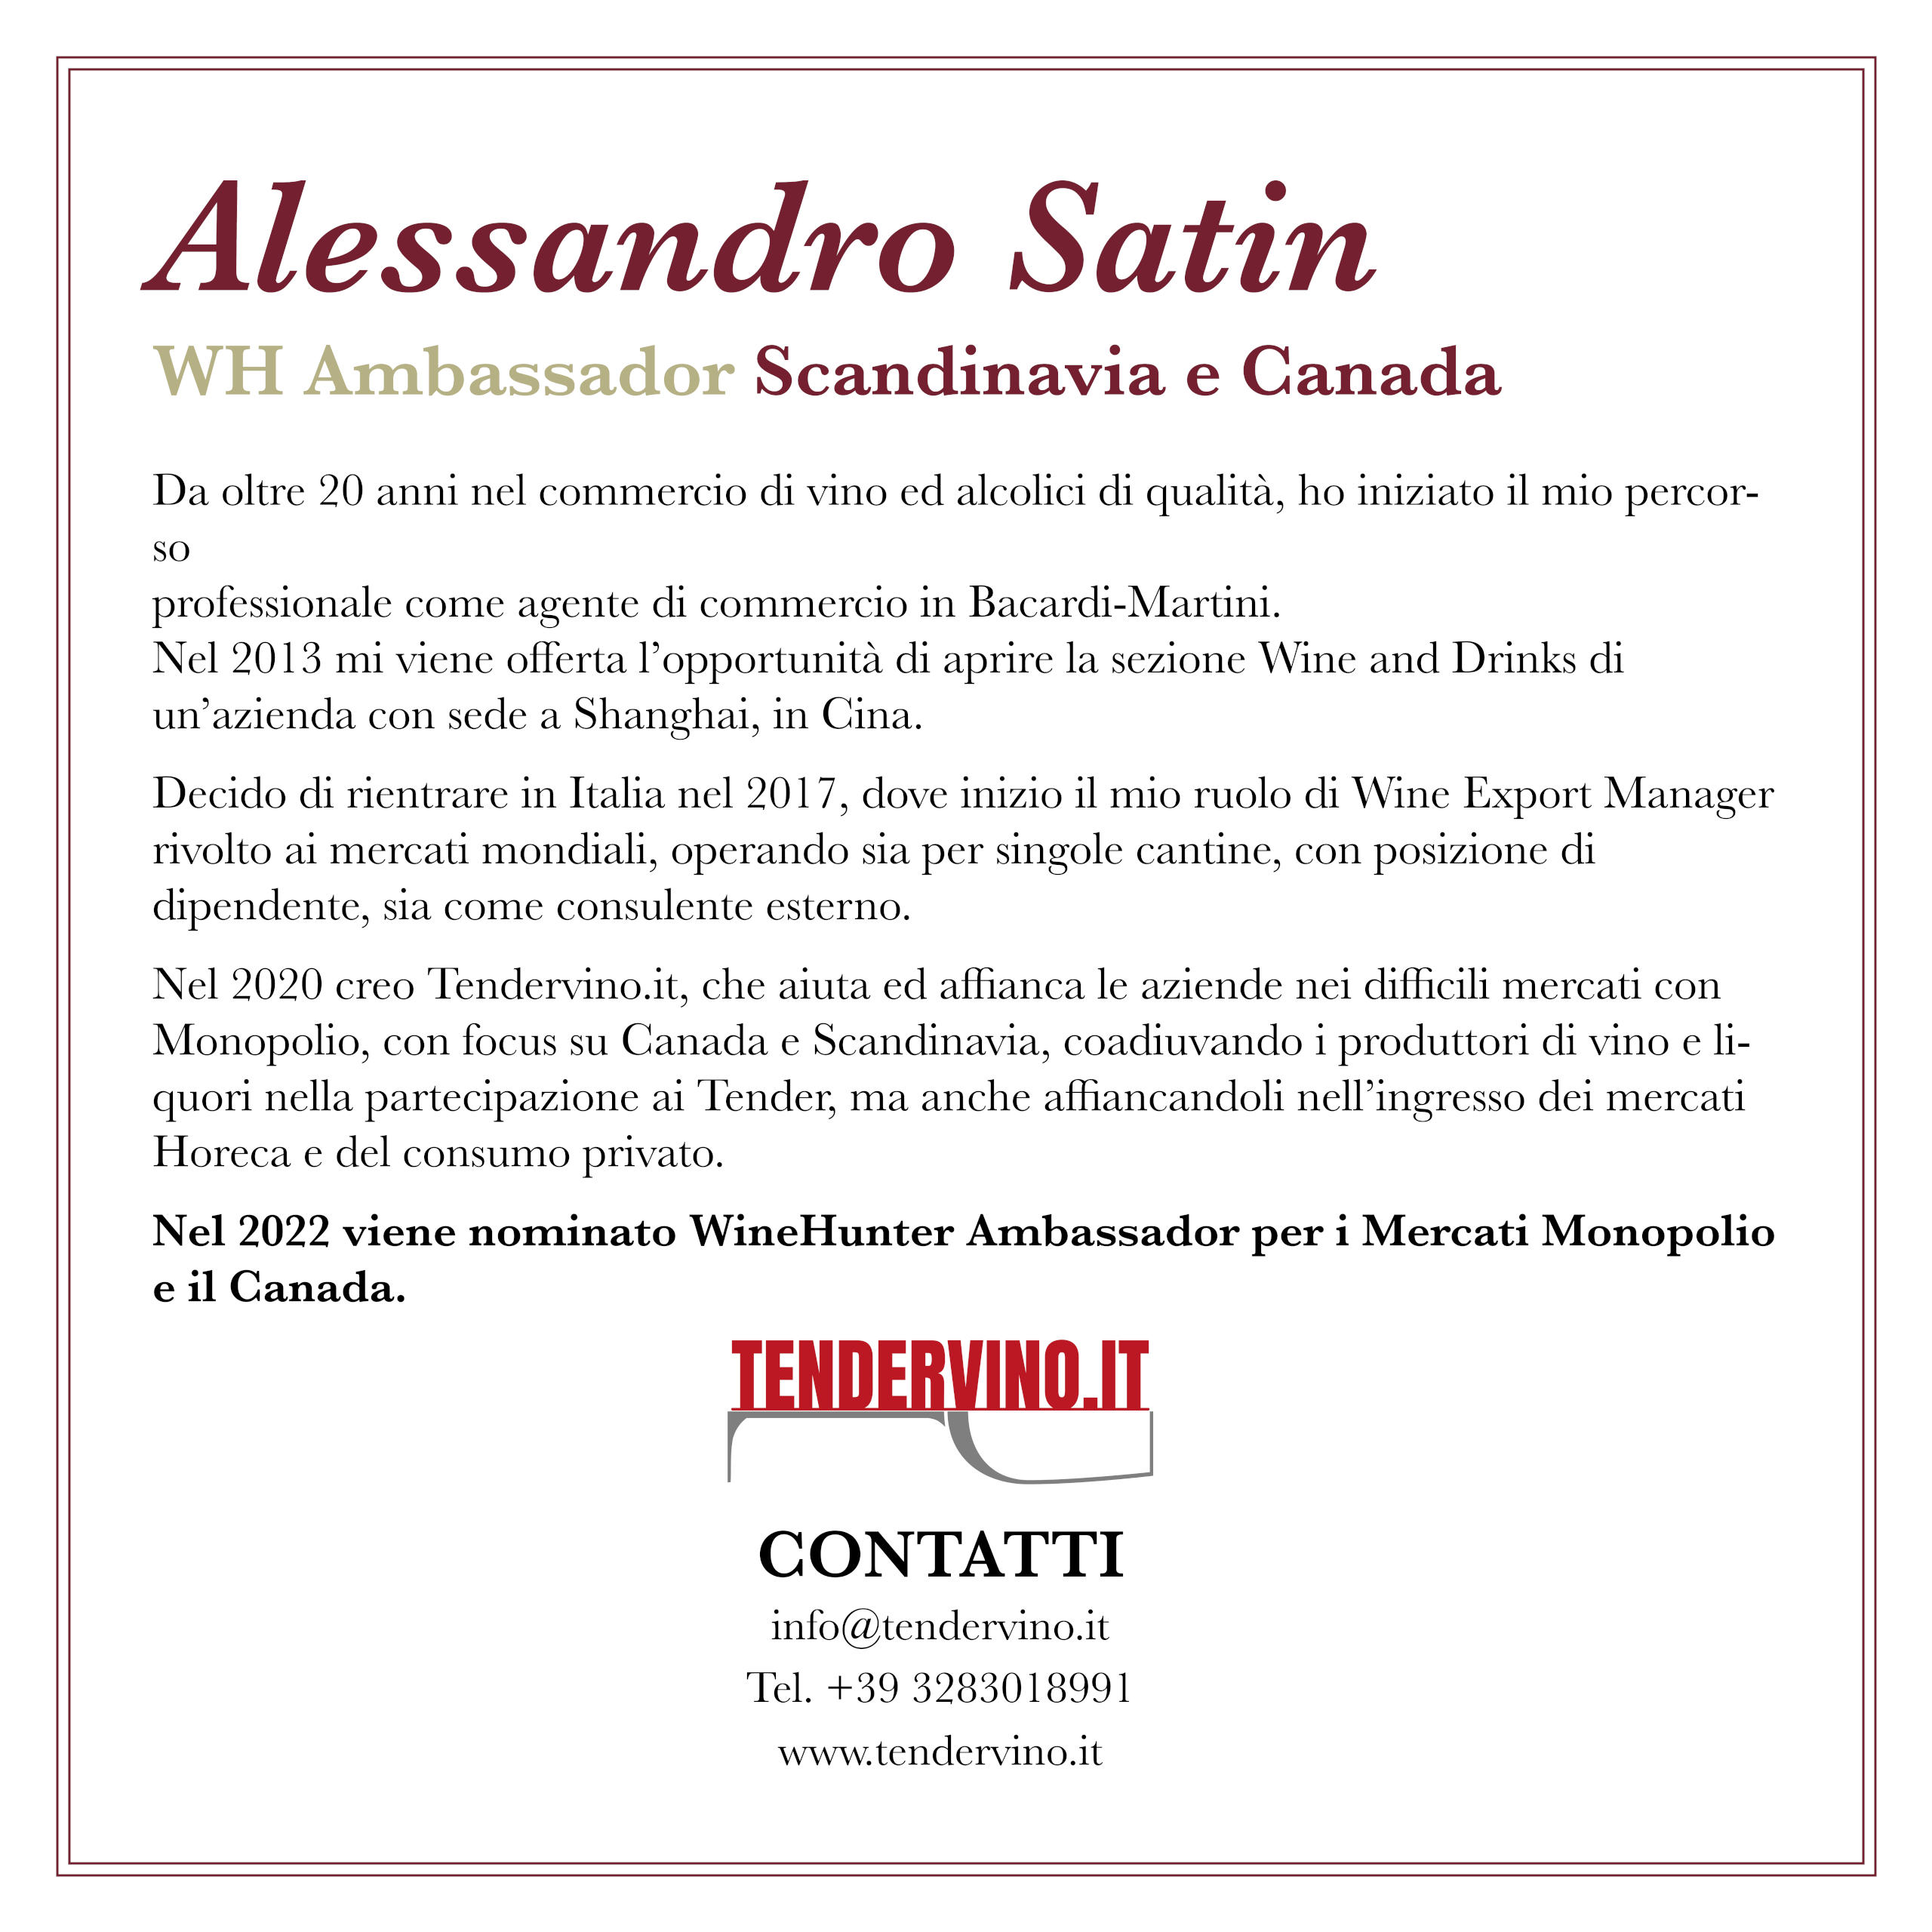 WineHunter Ambassador Canada Alessandro Satin Bio Back